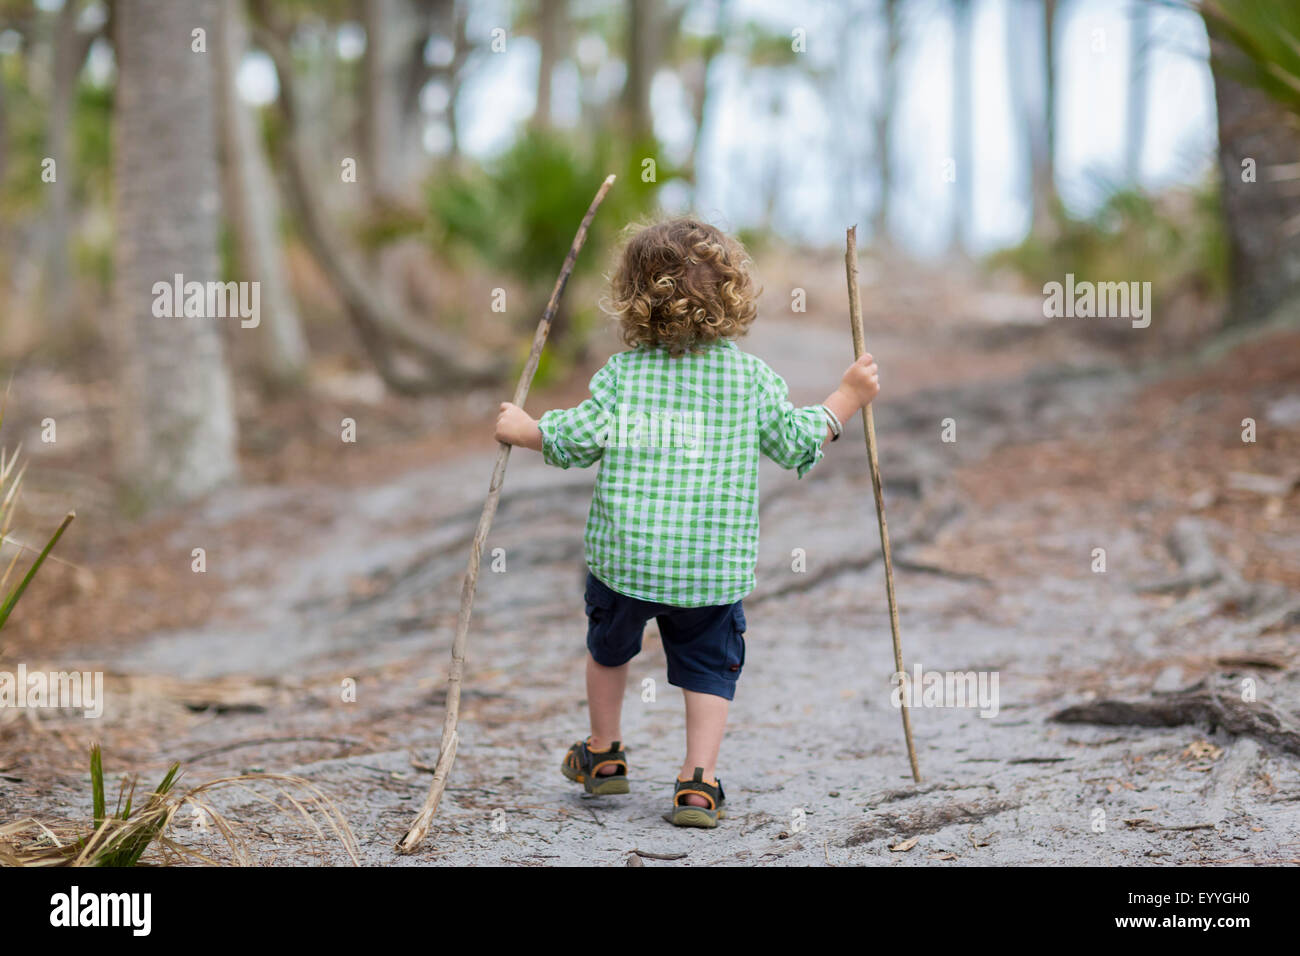 Caucasian baby boy walking on dirt path Stock Photo